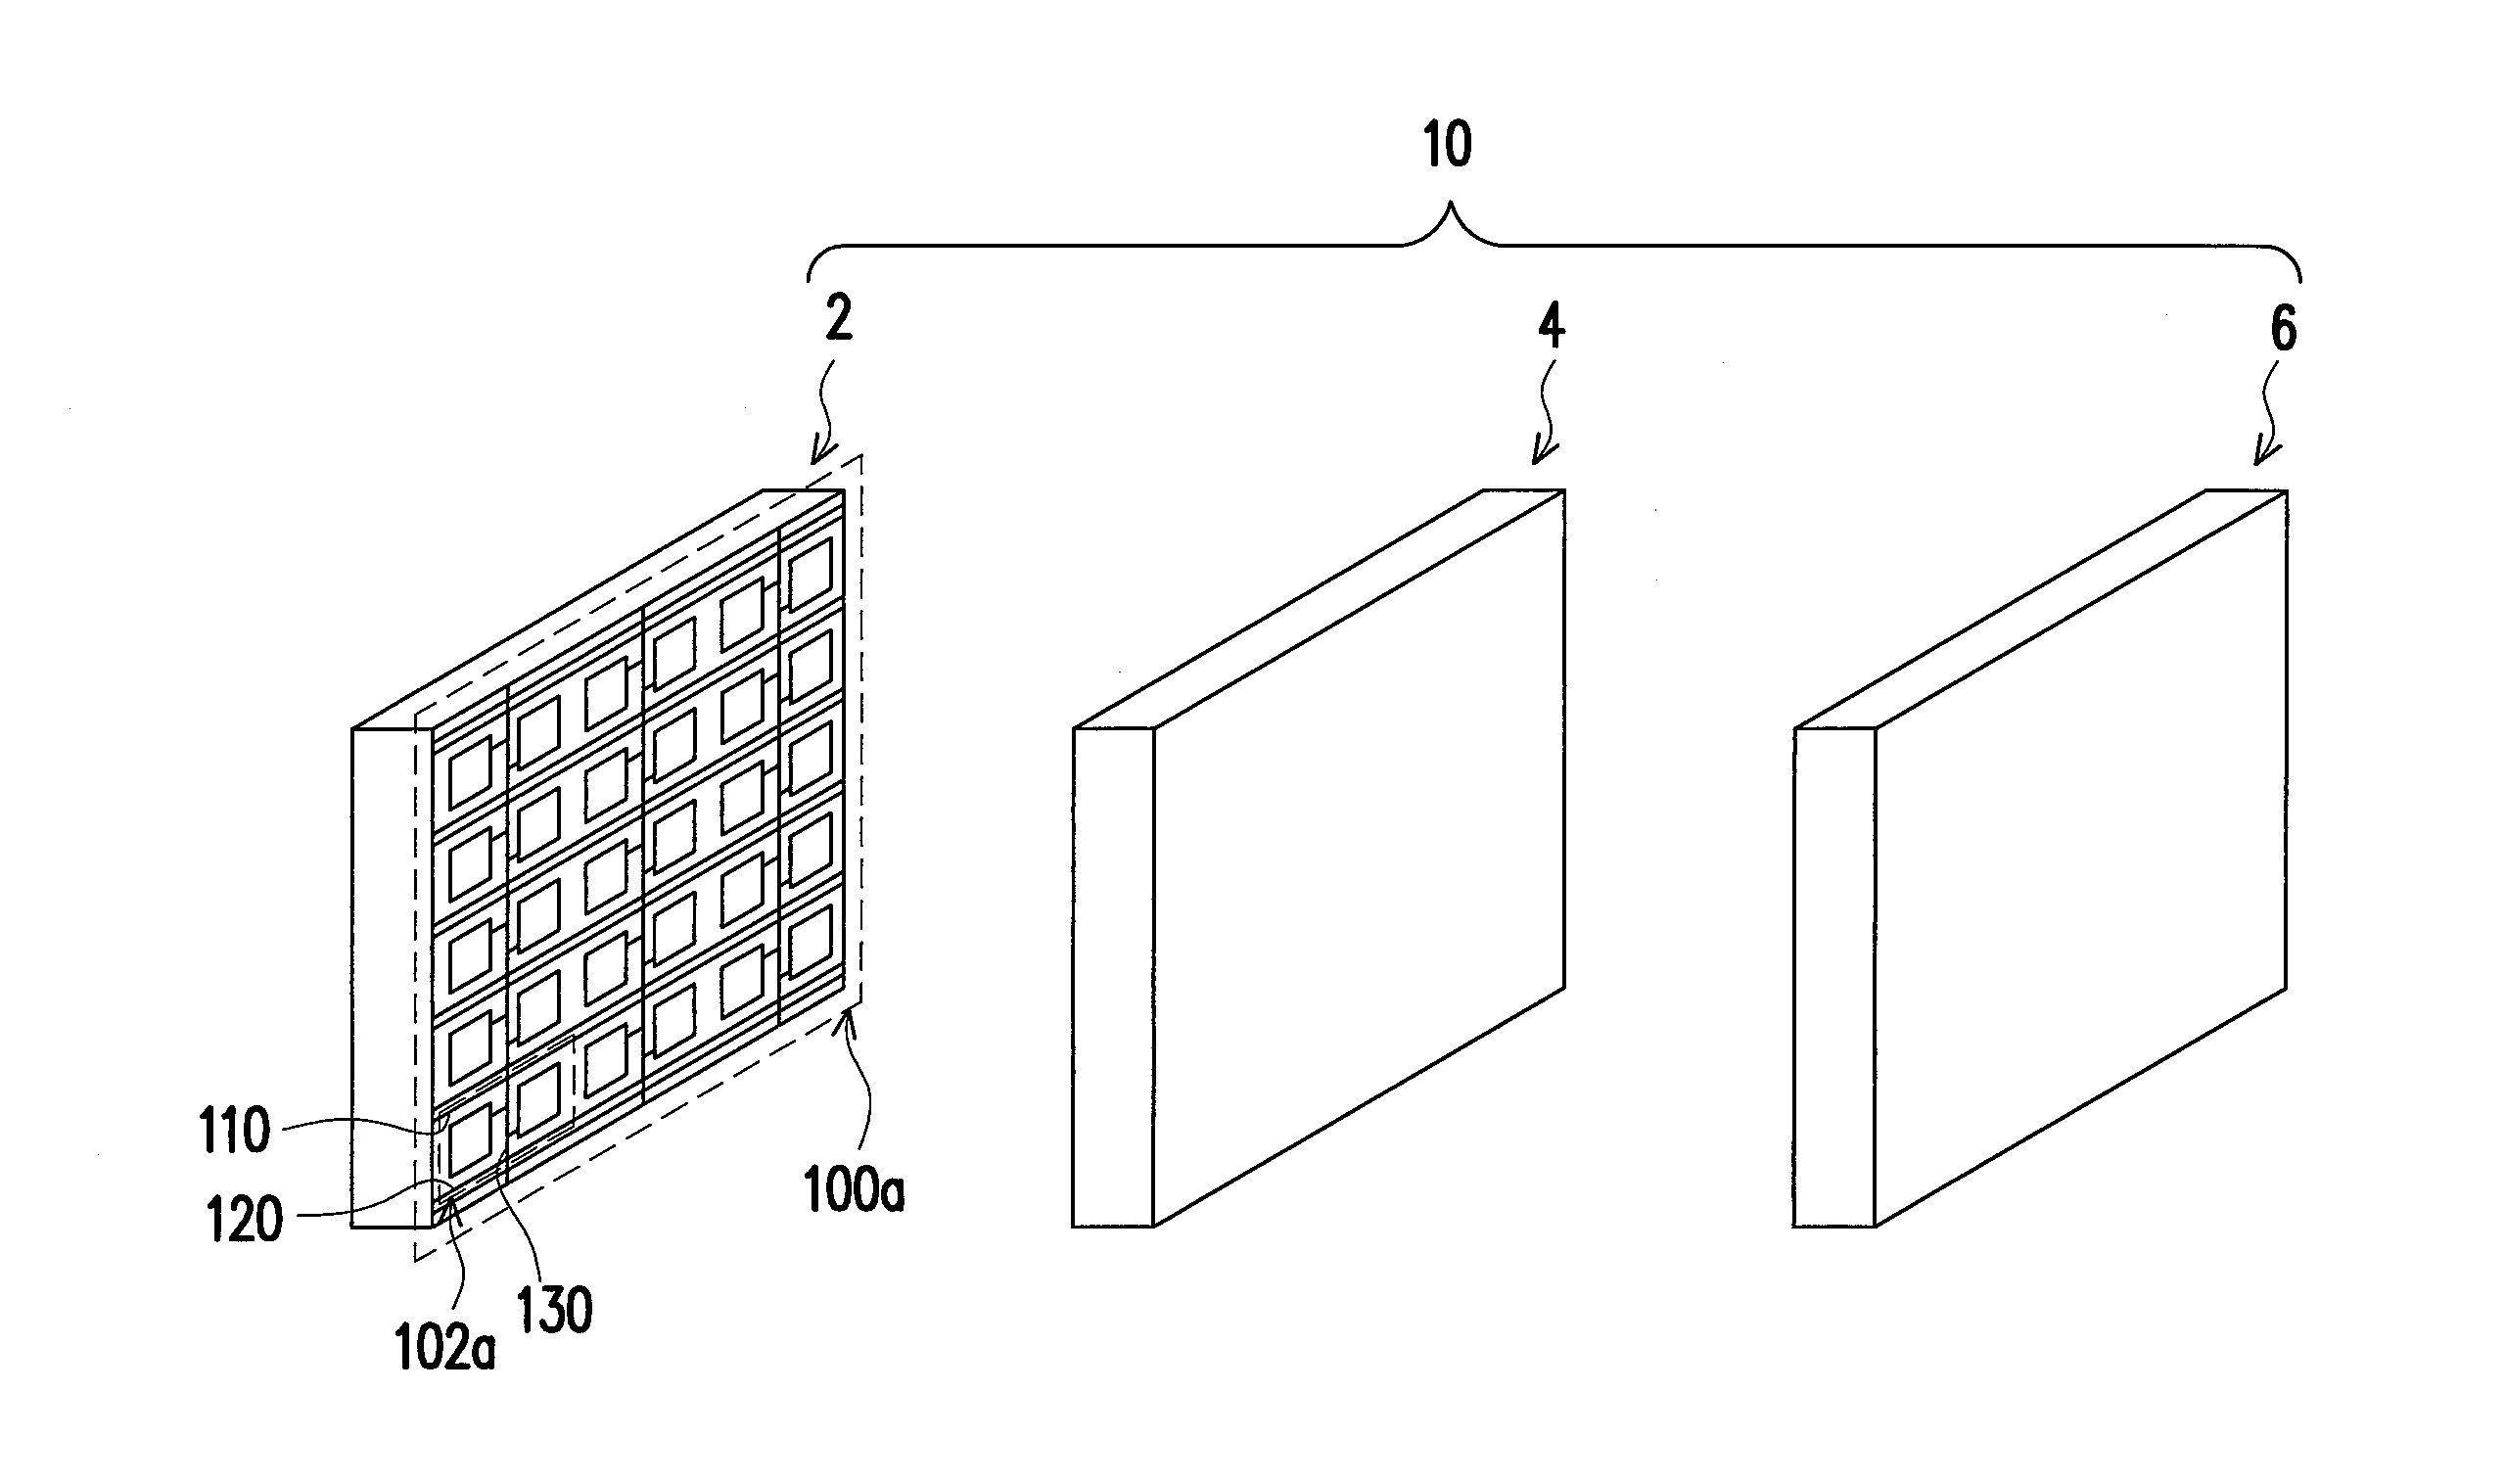 Pixel array and display panel